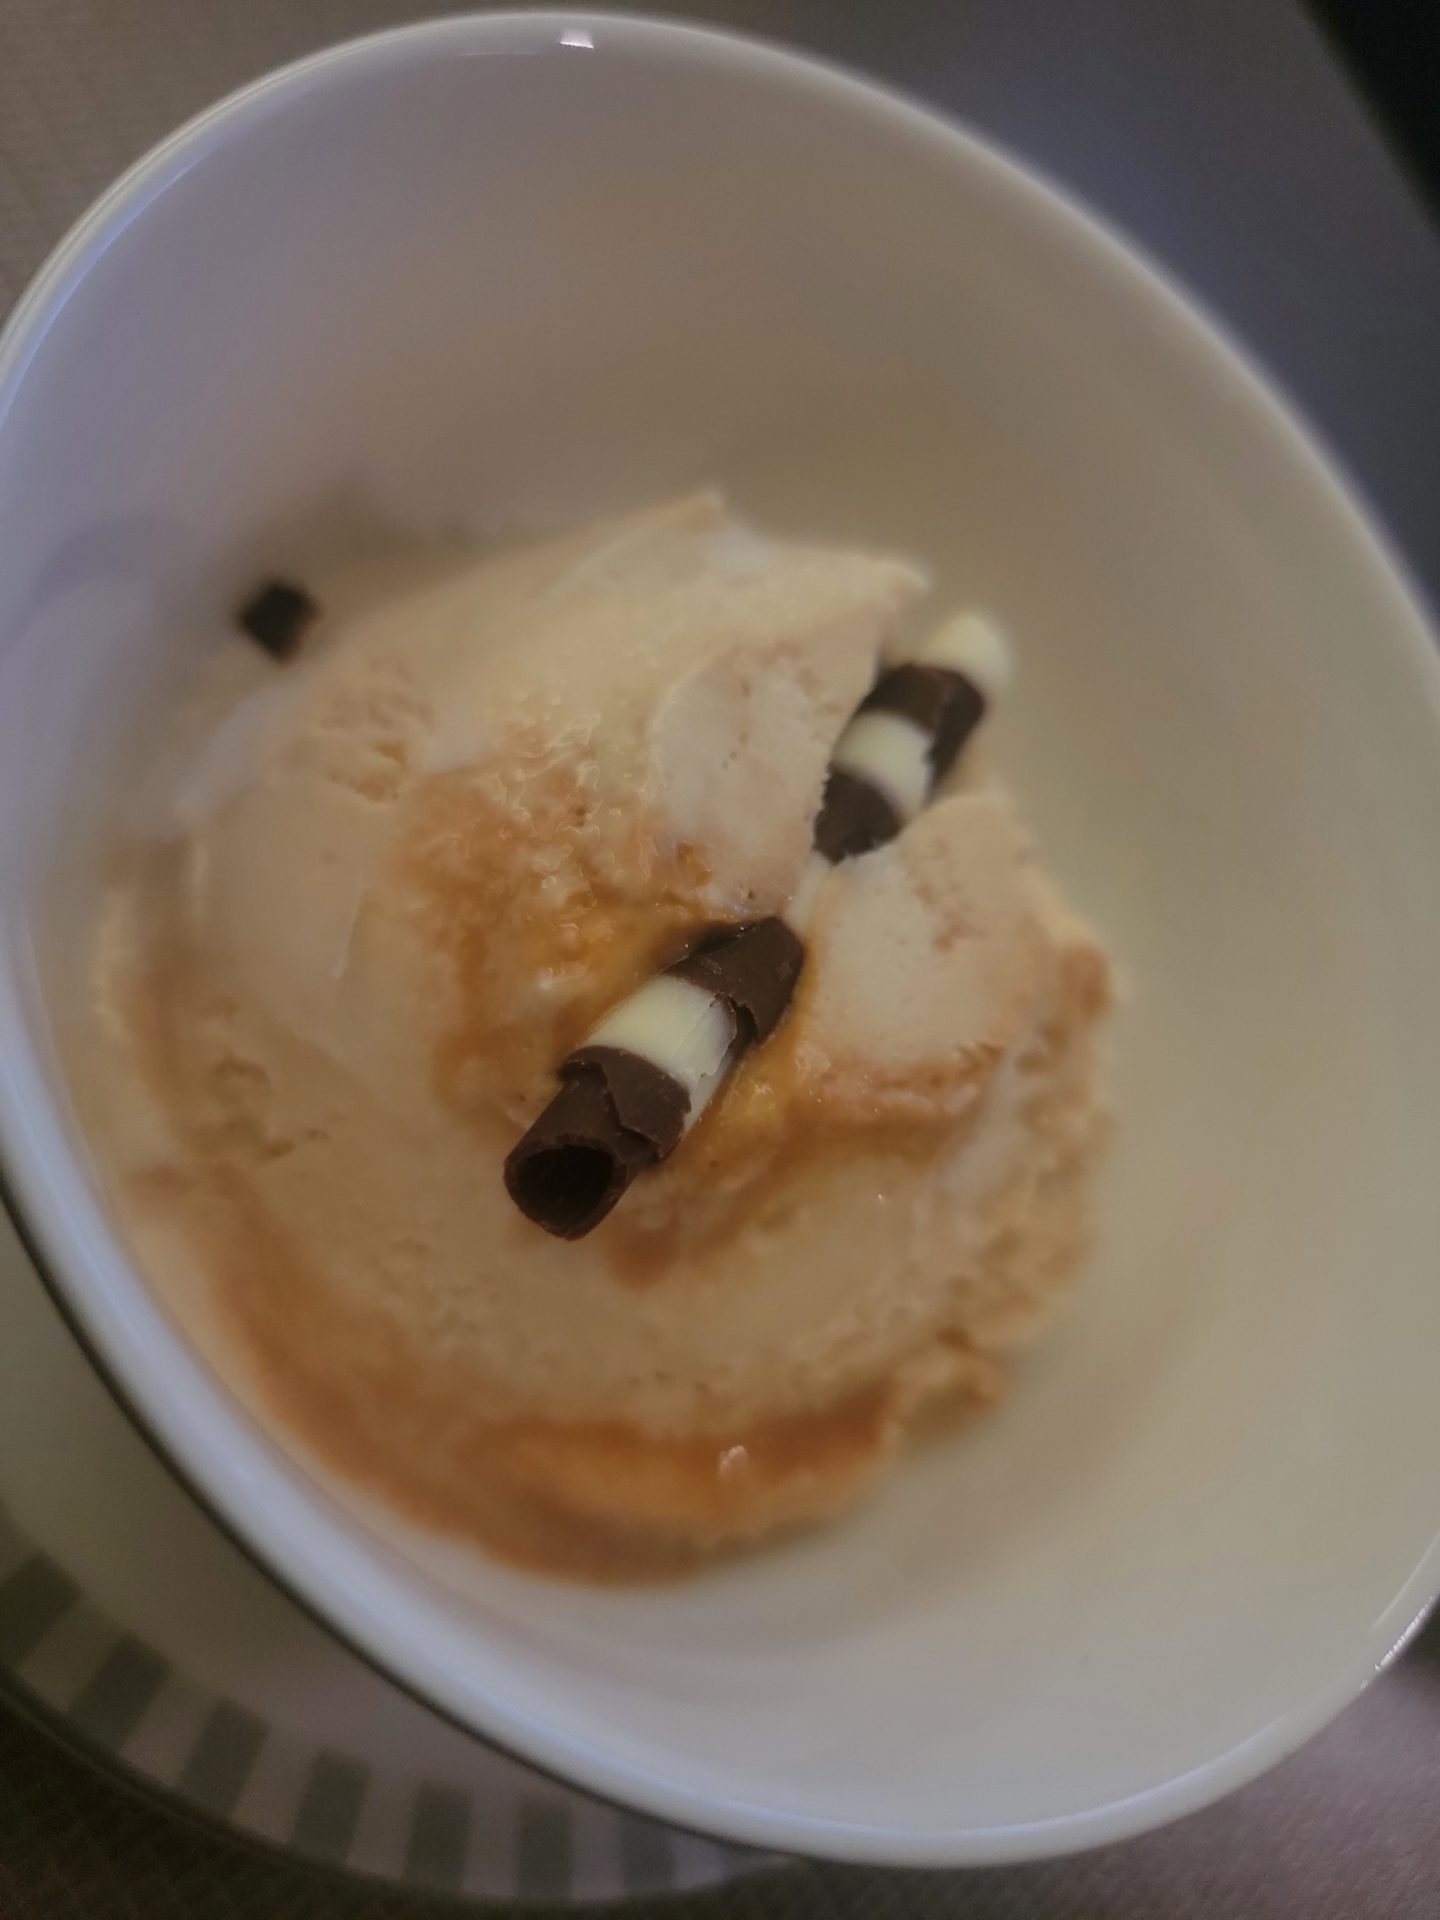 a bowl of ice cream with chocolate sticks